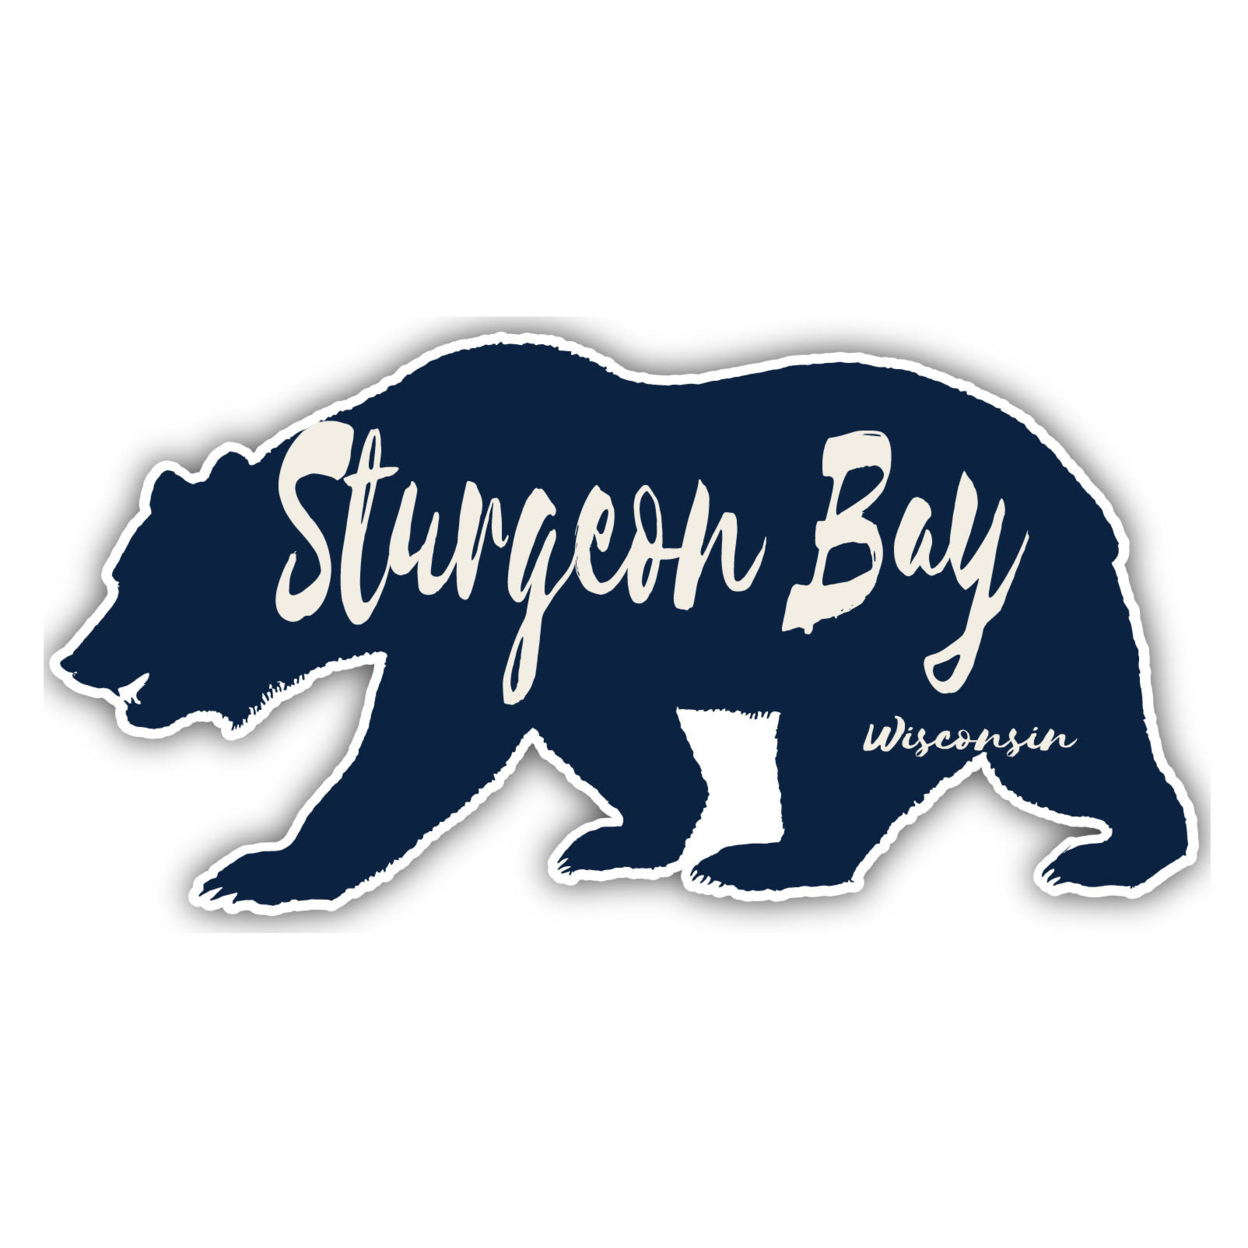 Sturgeon Bay Wisconsin Souvenir Decorative Stickers (Choose Theme And Size) - Single Unit, 4-Inch, Bear